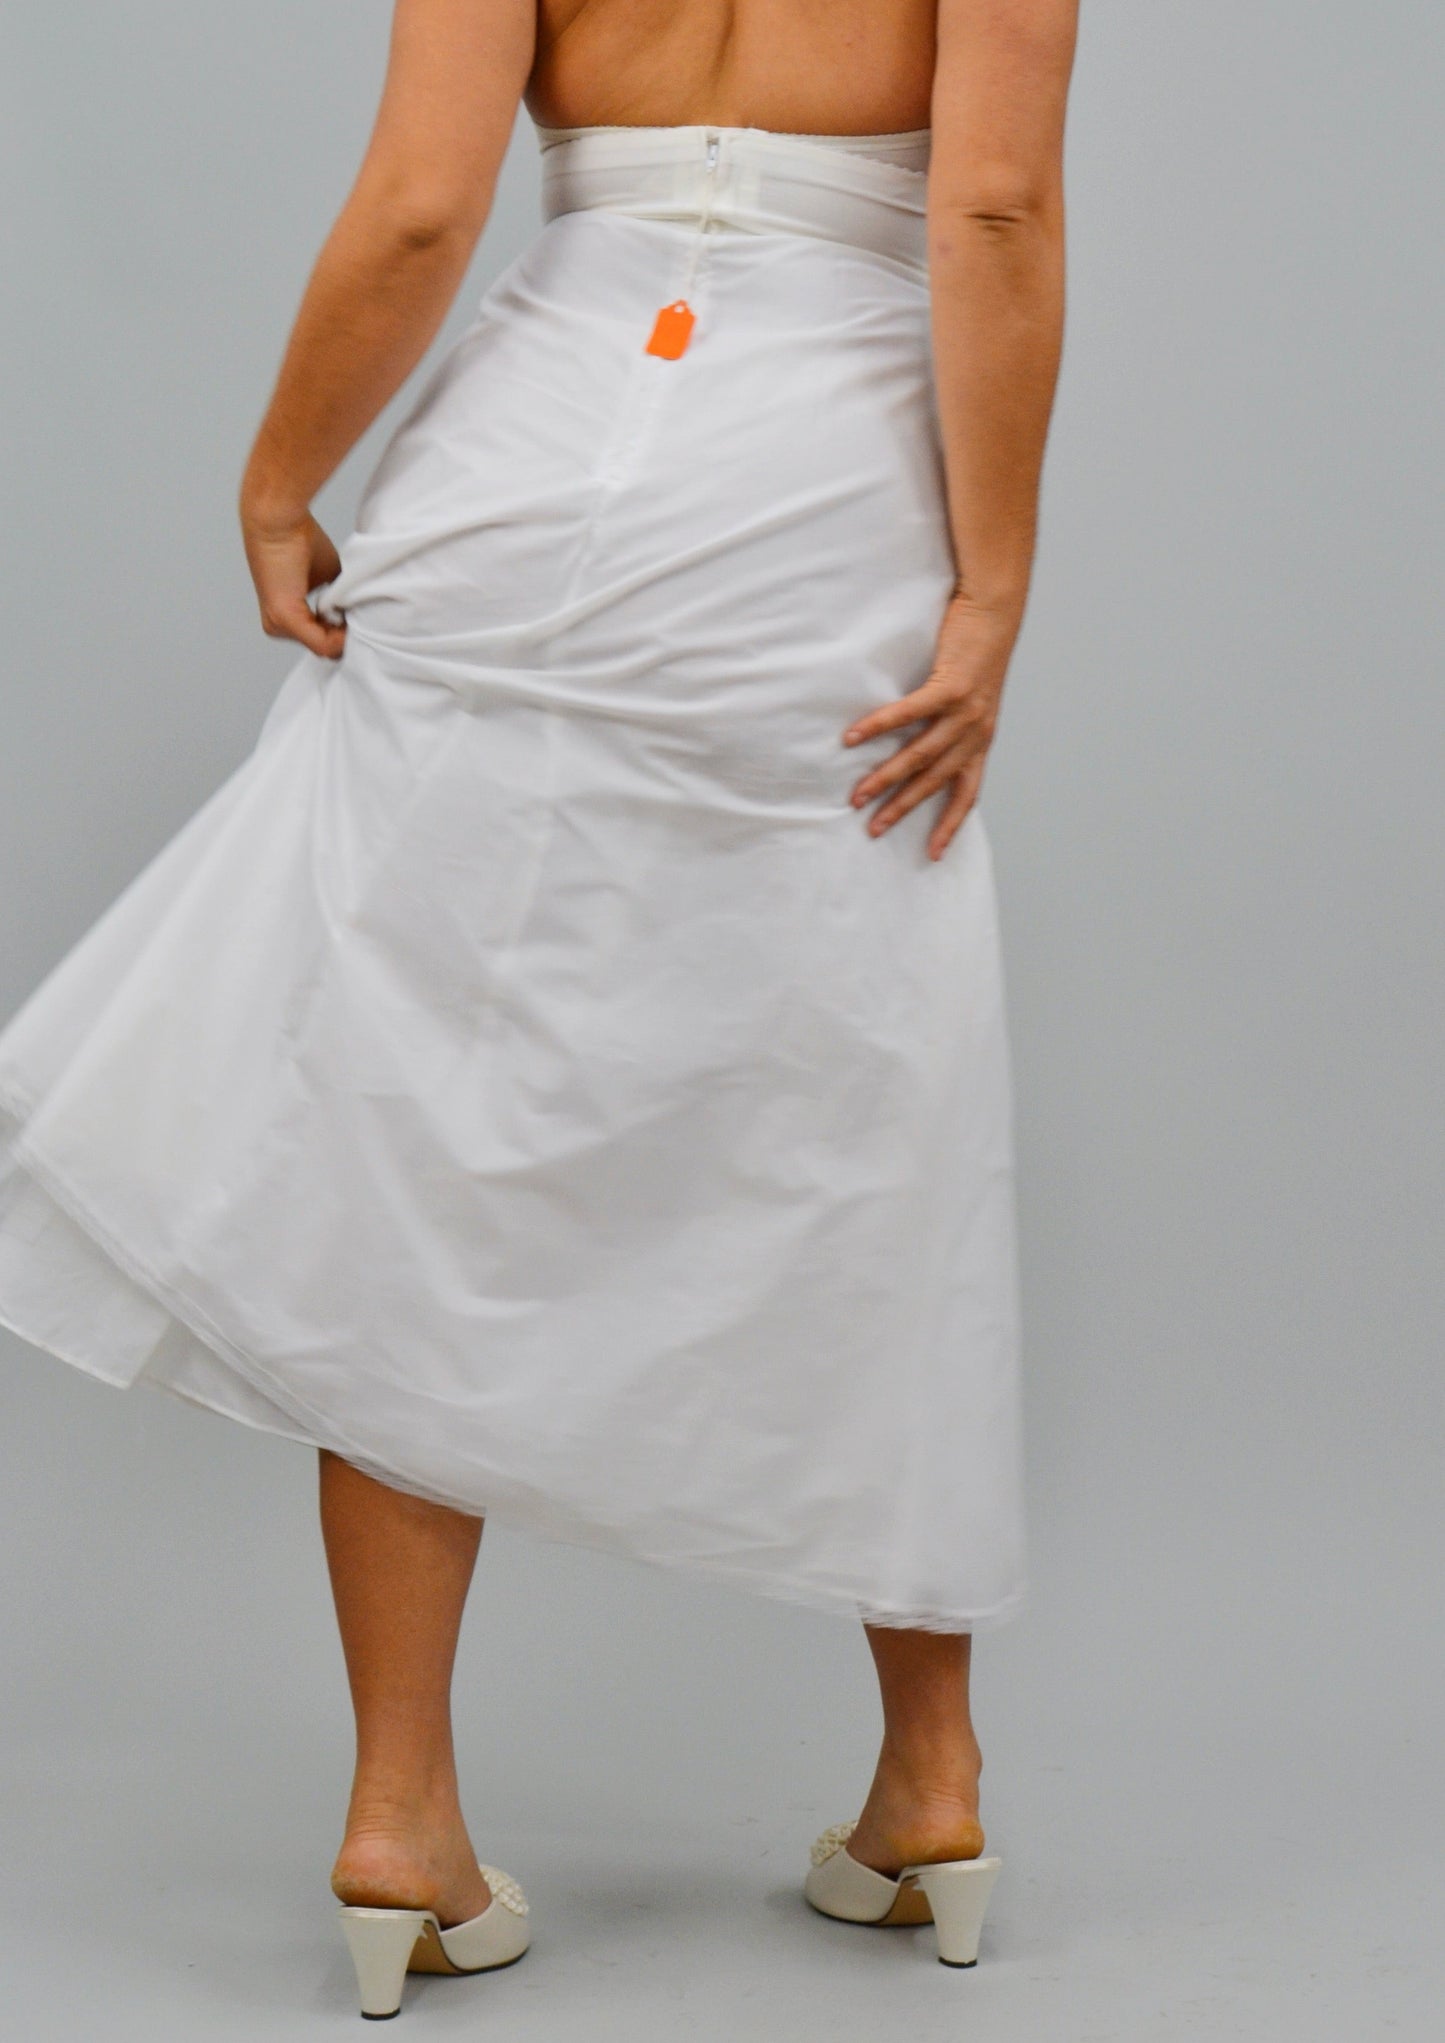 The Moxie A-Line Petticoat Skirt